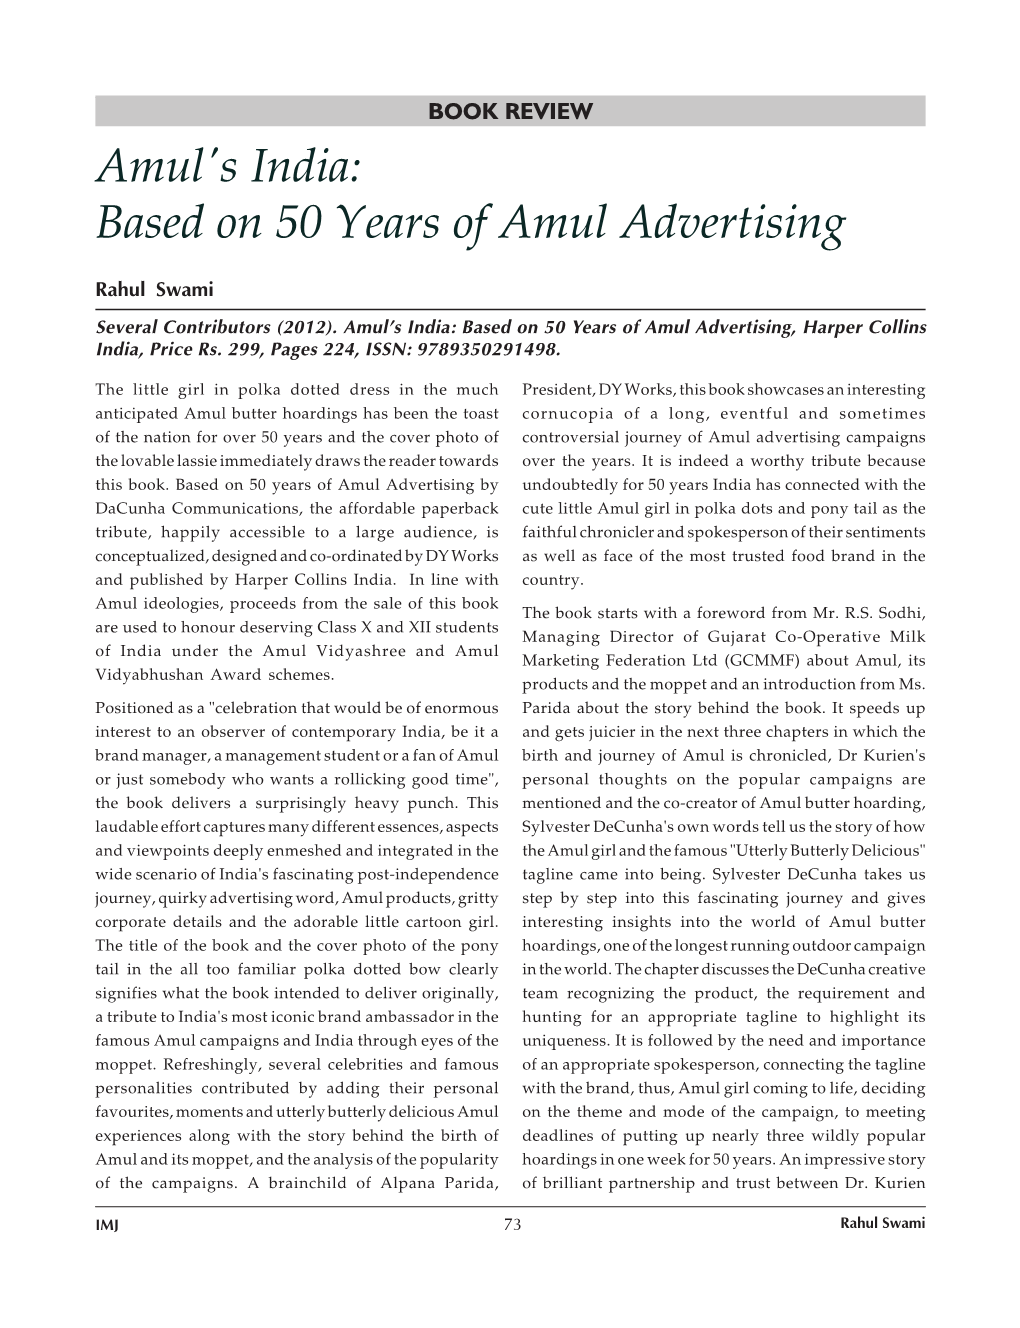 Amul's India: Based on 50 Years of Amul Advertising